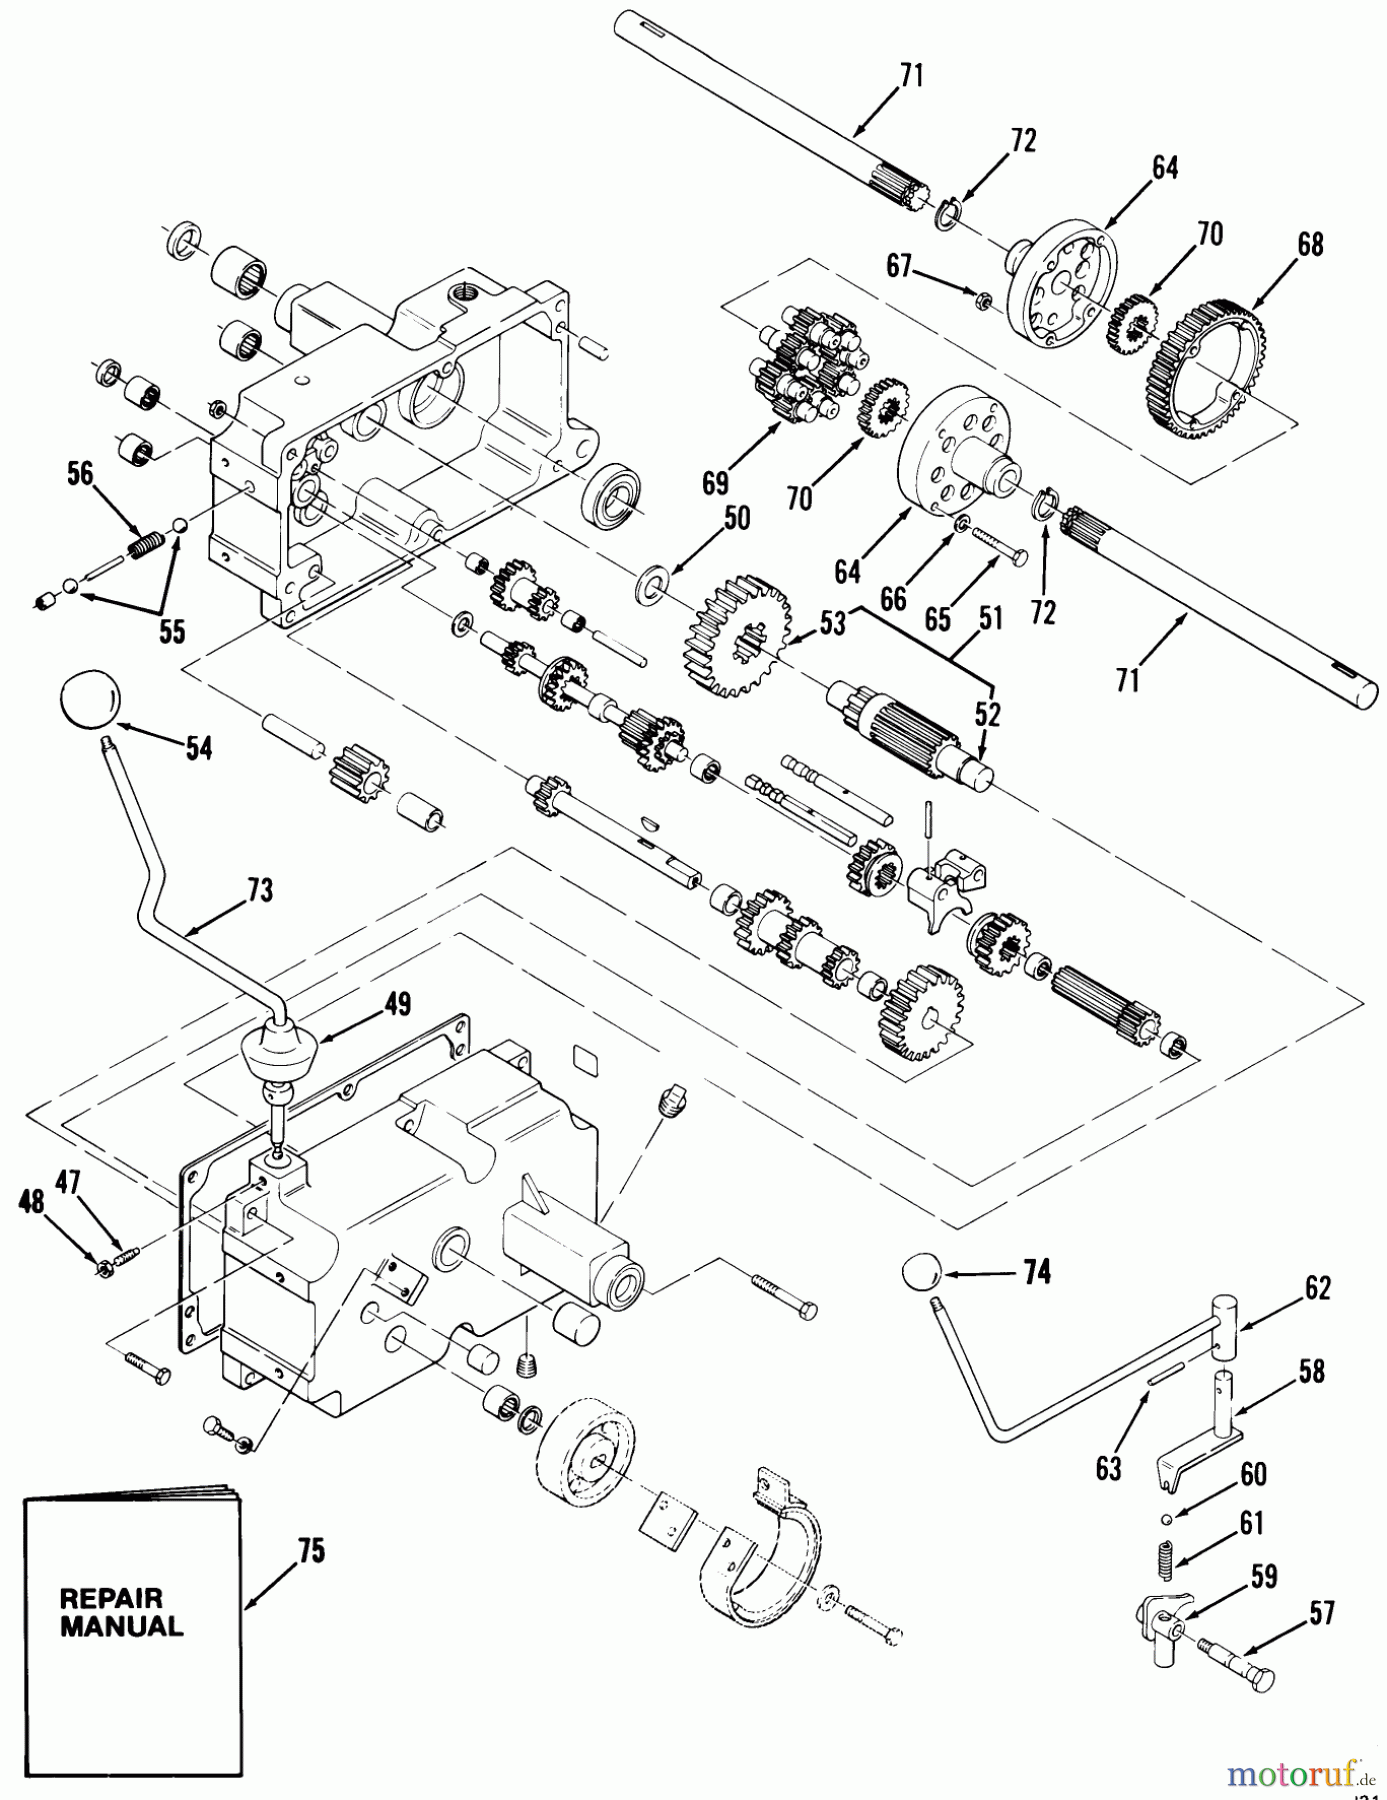  Toro Neu Mowers, Lawn & Garden Tractor Seite 1 01-14KE04 (C-145) - Toro C-145 Automatic Tractor, 1983 MECHANICAL TRANSMISSION-8 SPEED #2